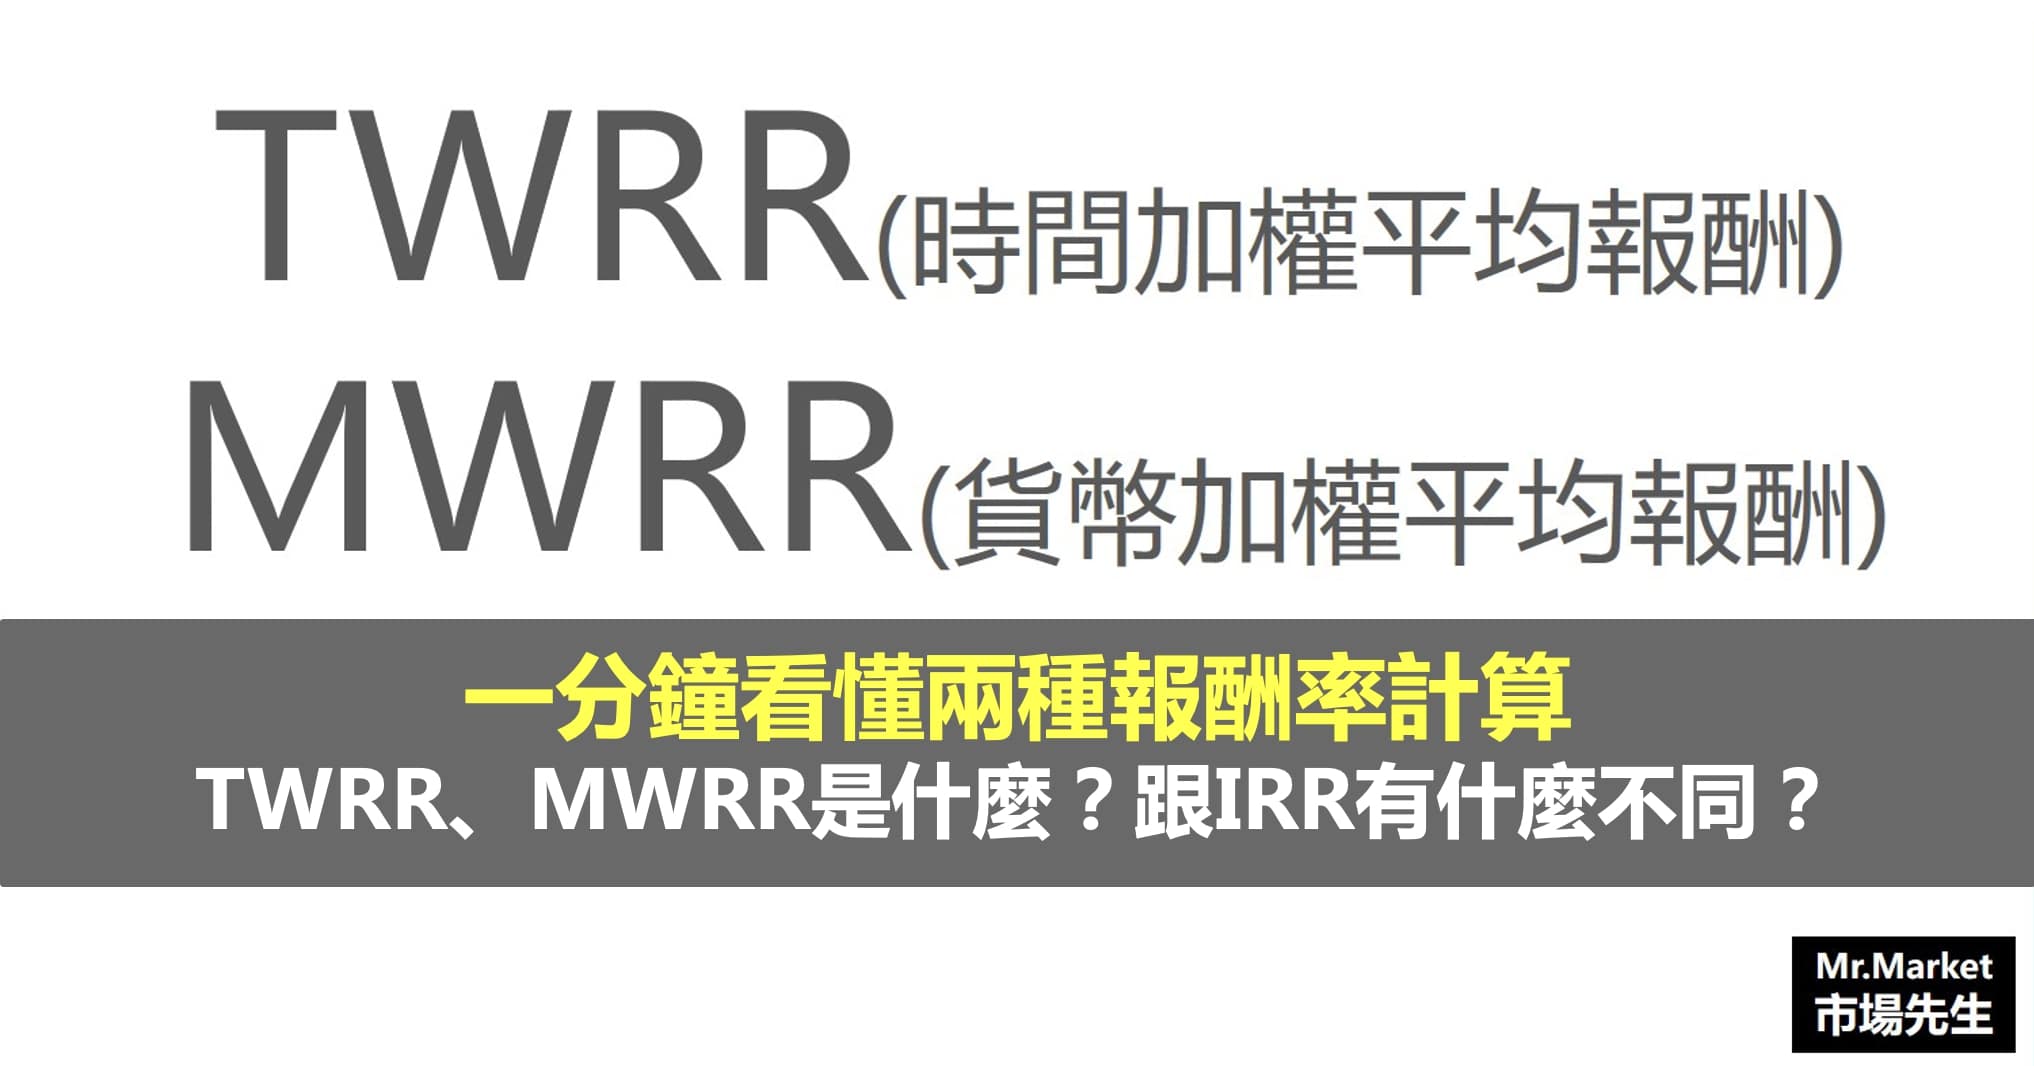 TWRR時間加權平均報酬 vs MWRR資金加權平均報酬 完整解析-和IRR一樣嗎？